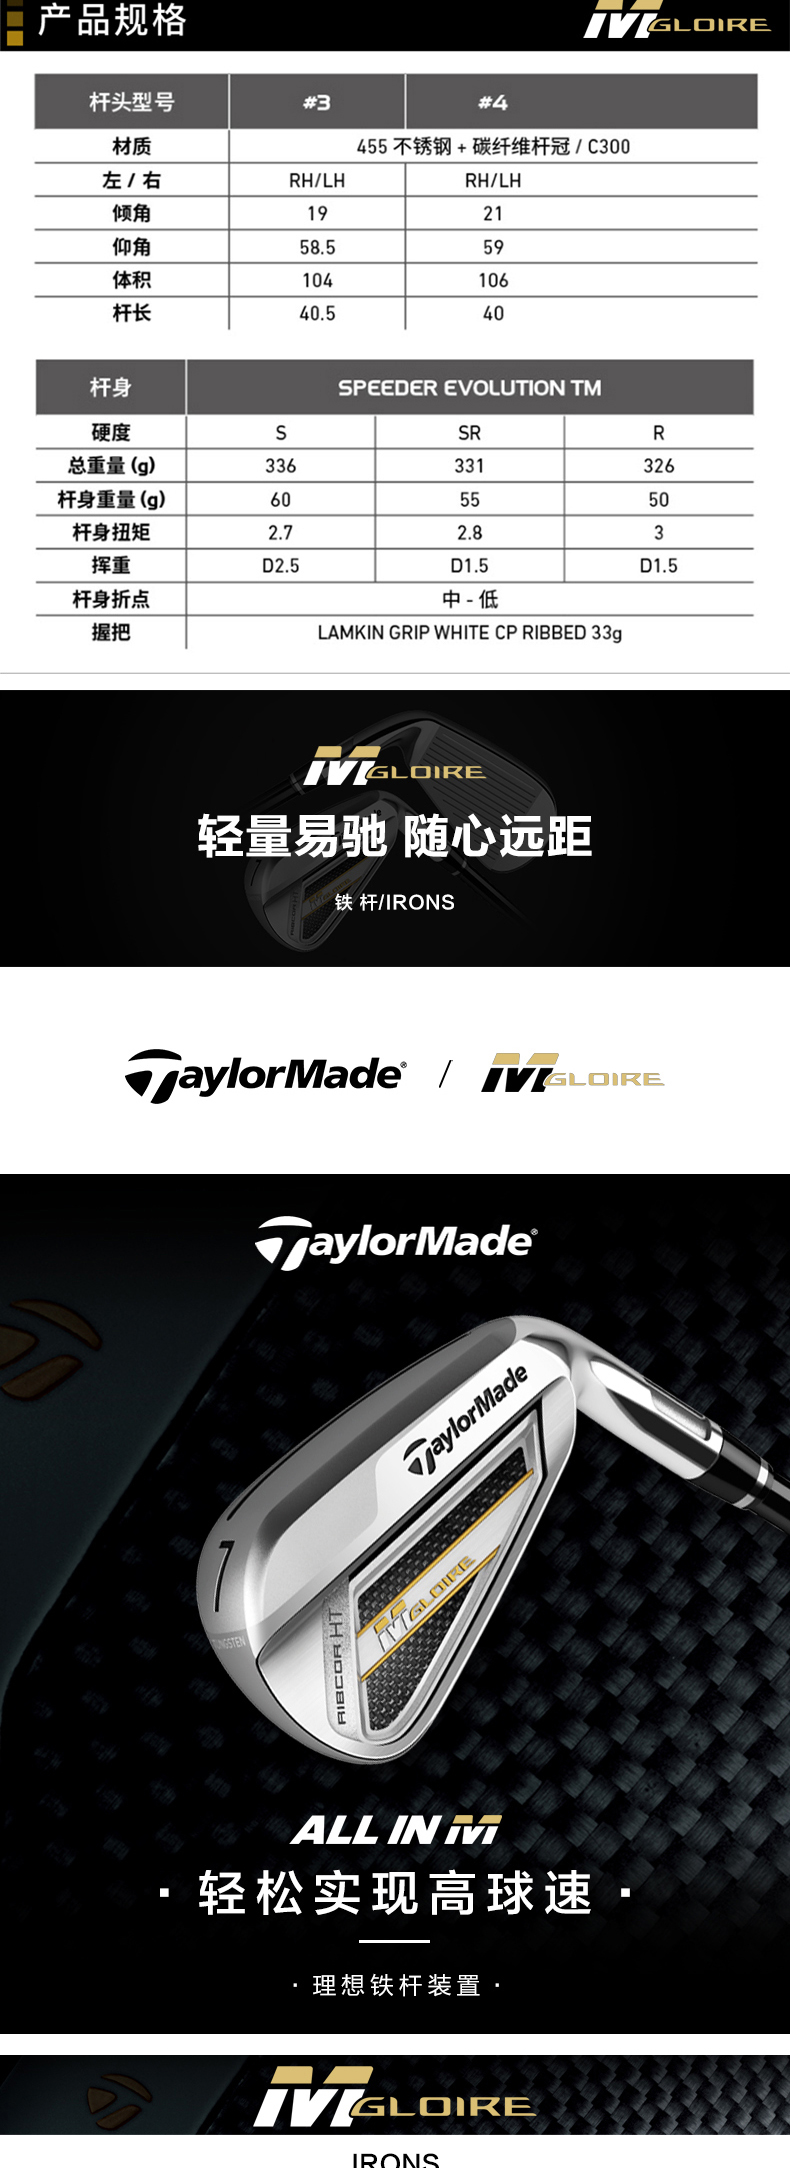 Taylormade泰勒梅高尔夫球杆男士套杆M GLOIRE荣耀系列新款全套杆